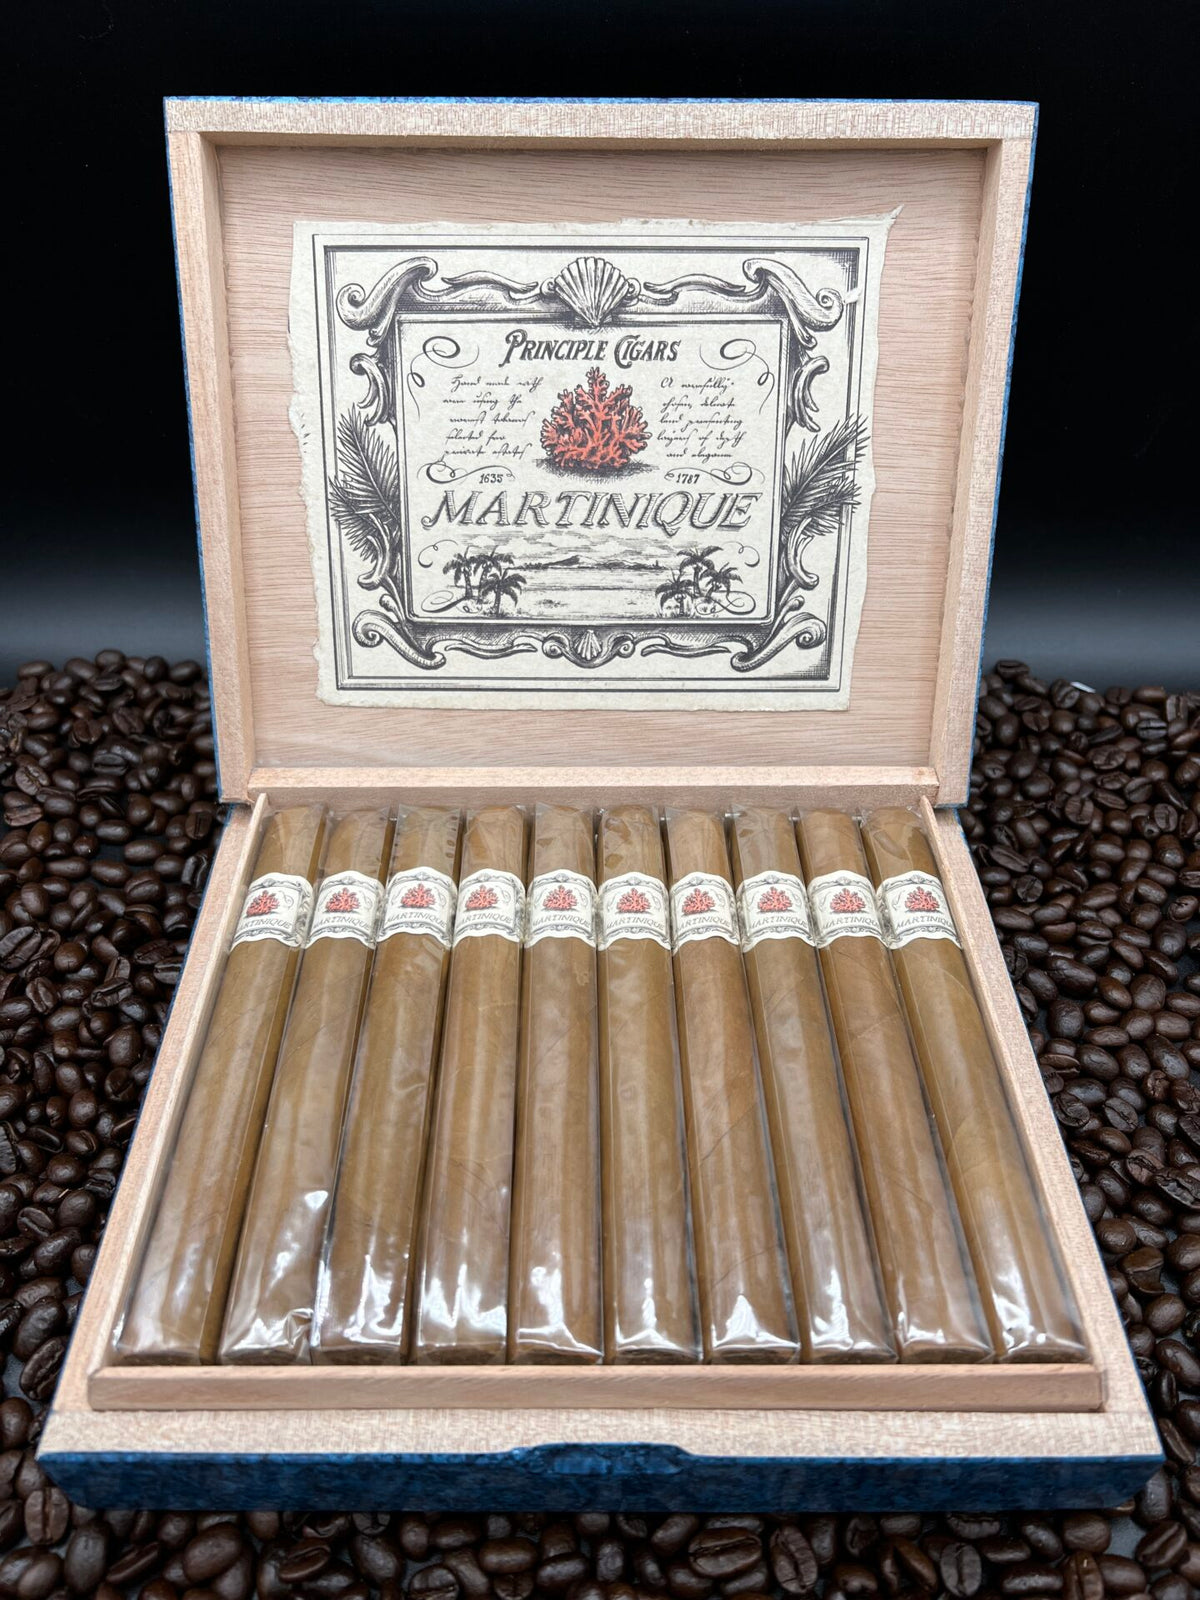 Principle Cigars - Martinique Corona Gorda cigars supplied by Sir Louis Cigars